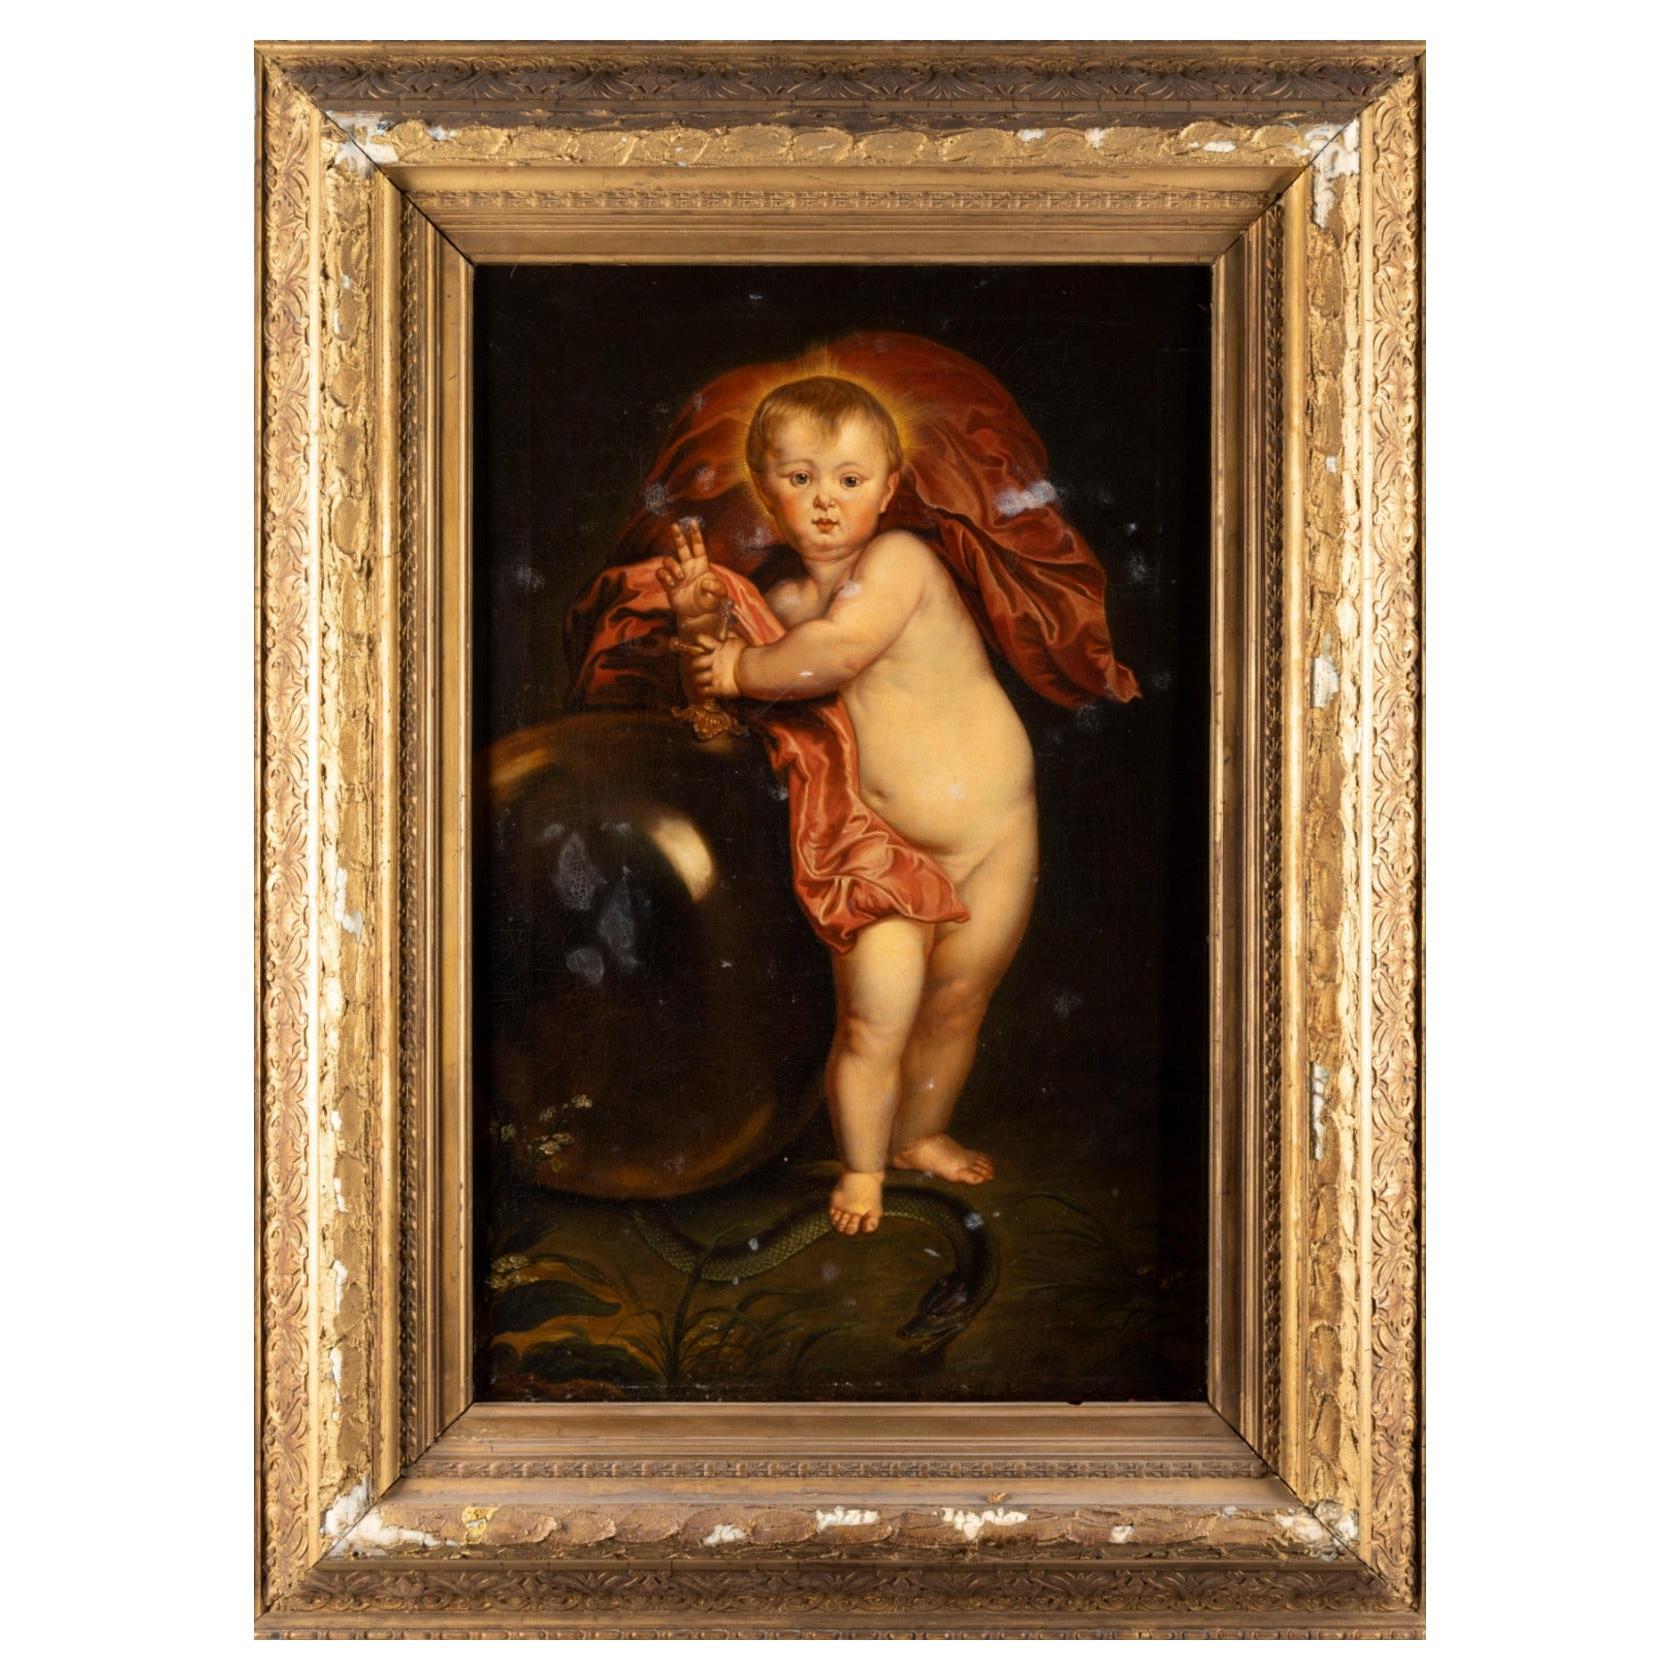 After Van Dyck 18th Century "THE CHRIST CHILD AS SALVATORE MUNDI"